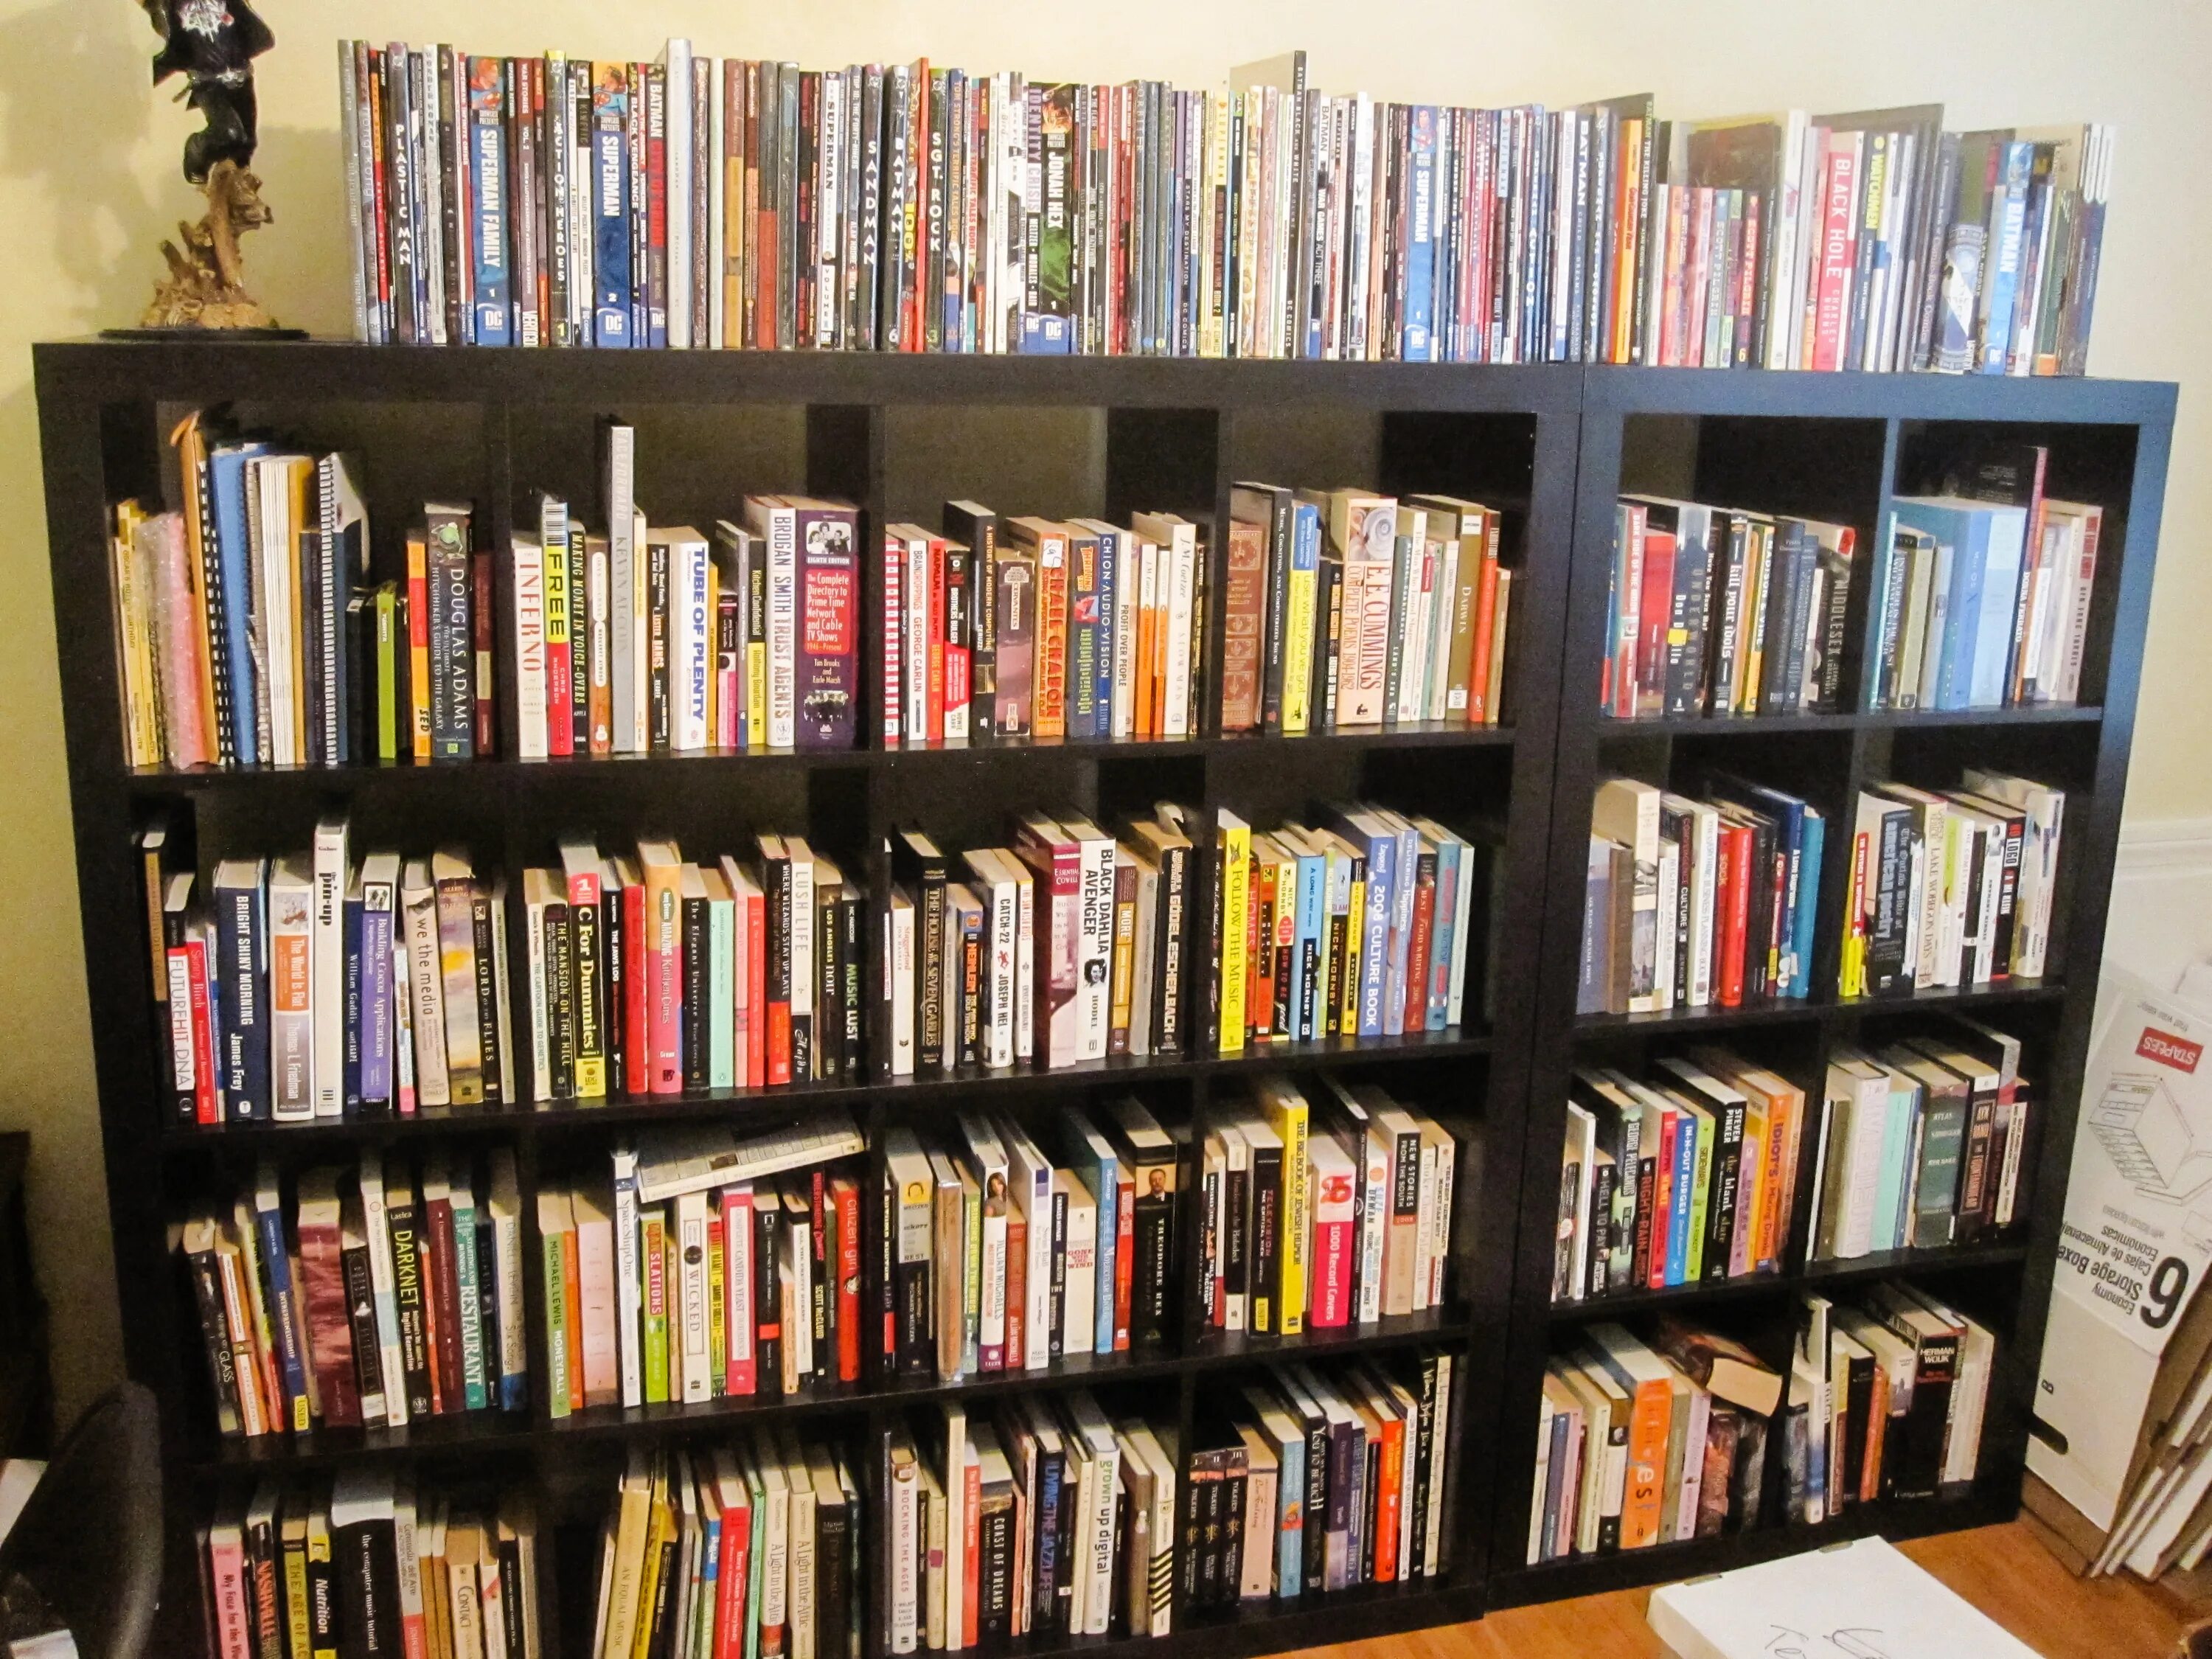 My book library. Book collection. Как коллекционировать книги. Collect books. Папа собирает коллекцию книг и журналов.